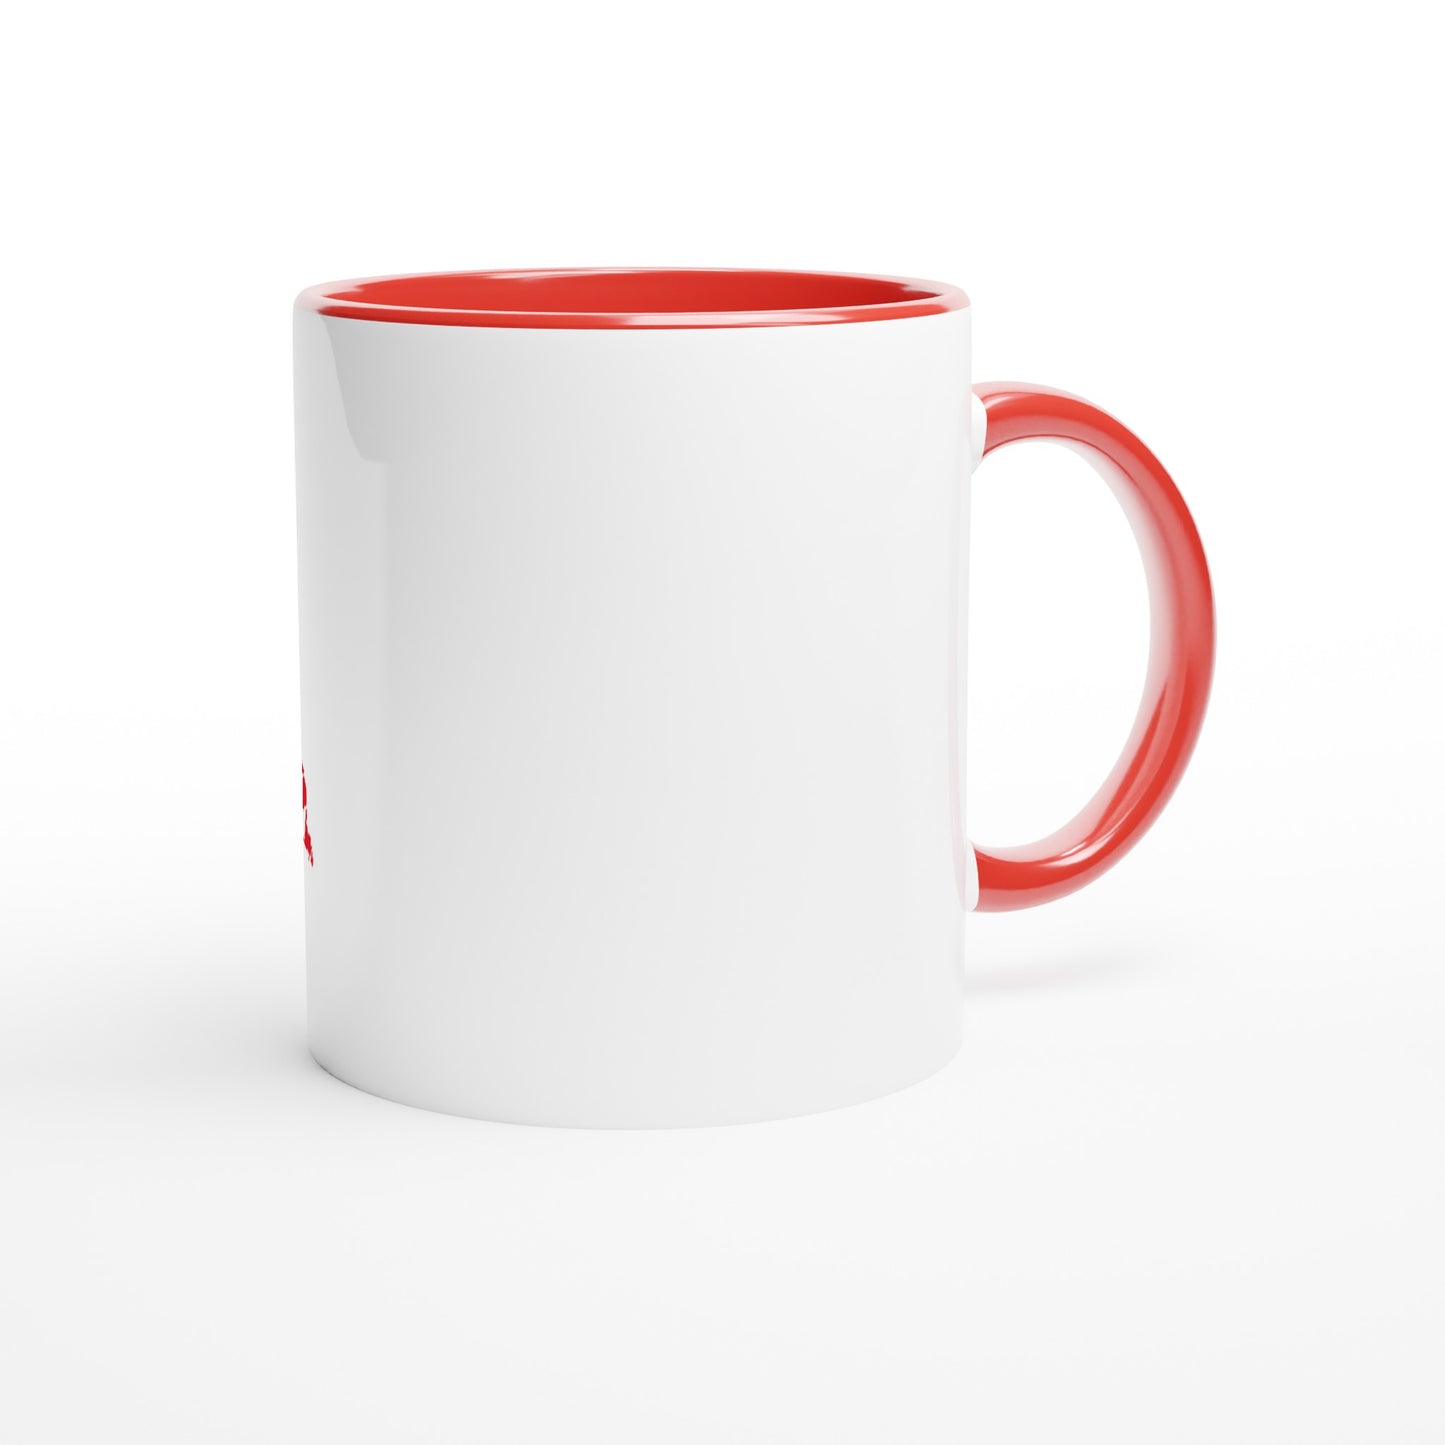 Happy Canada Day White 11oz Ceramic Mug with Color Inside